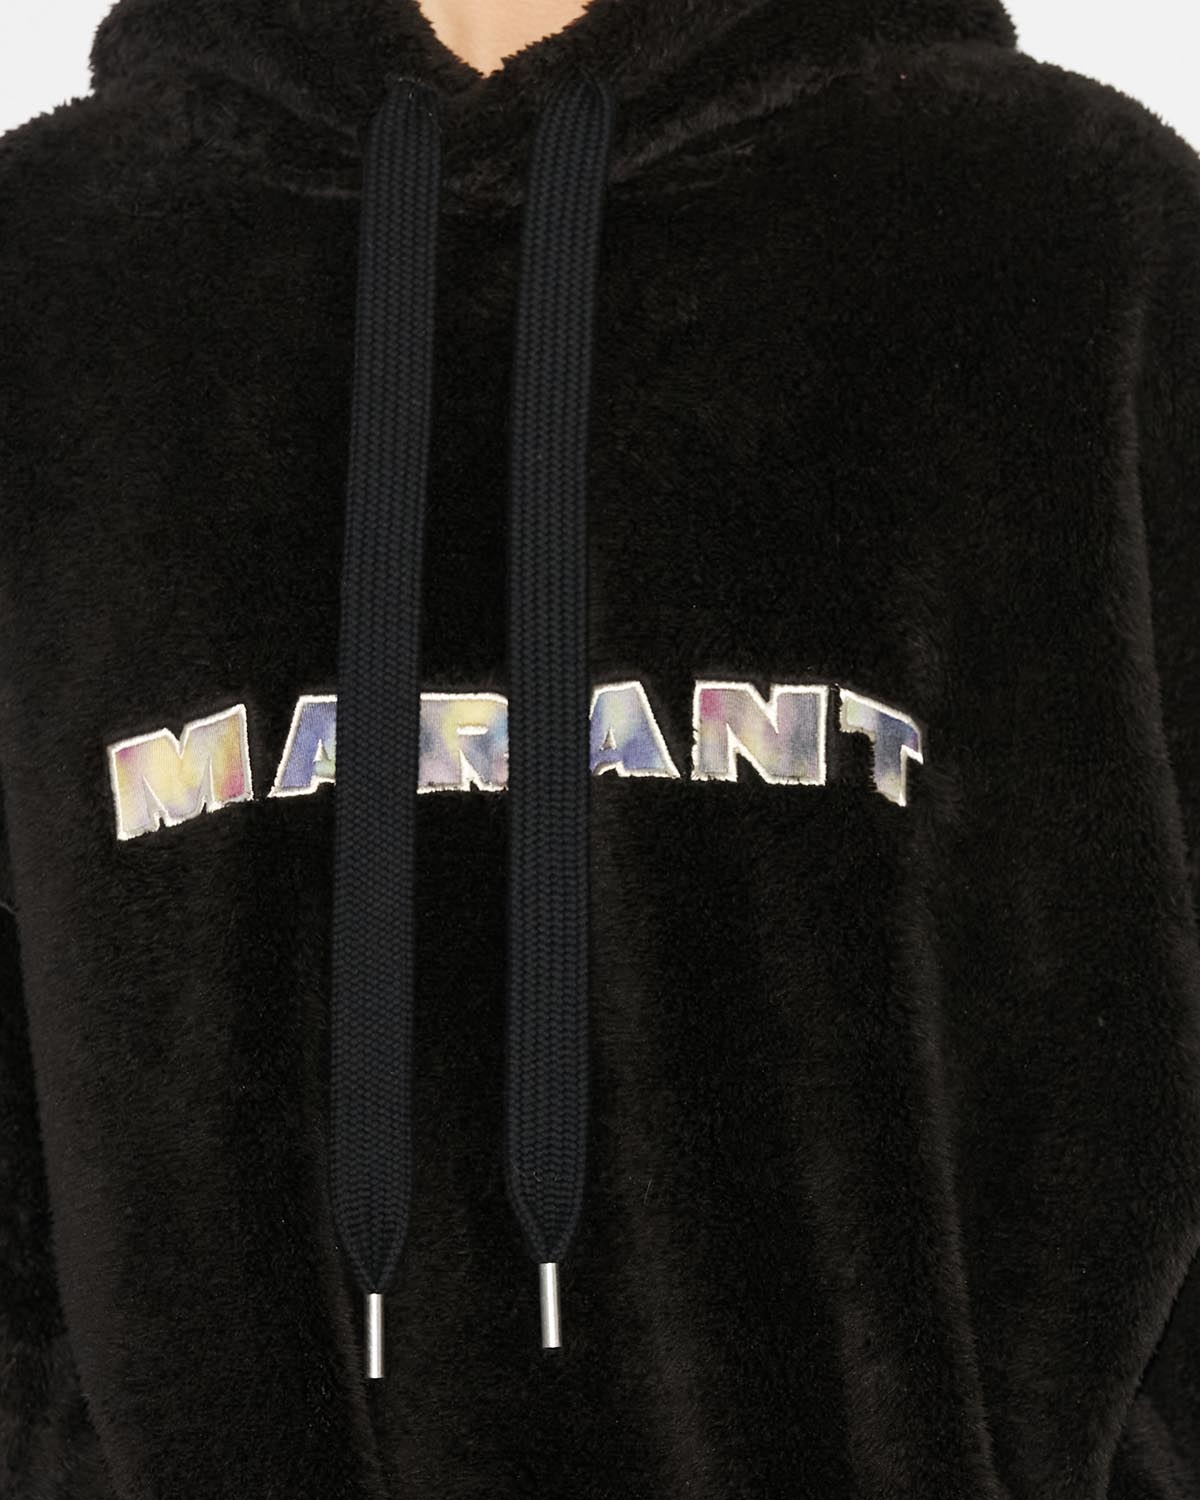 Martia 스웨트 셔츠 Woman 검은색 2